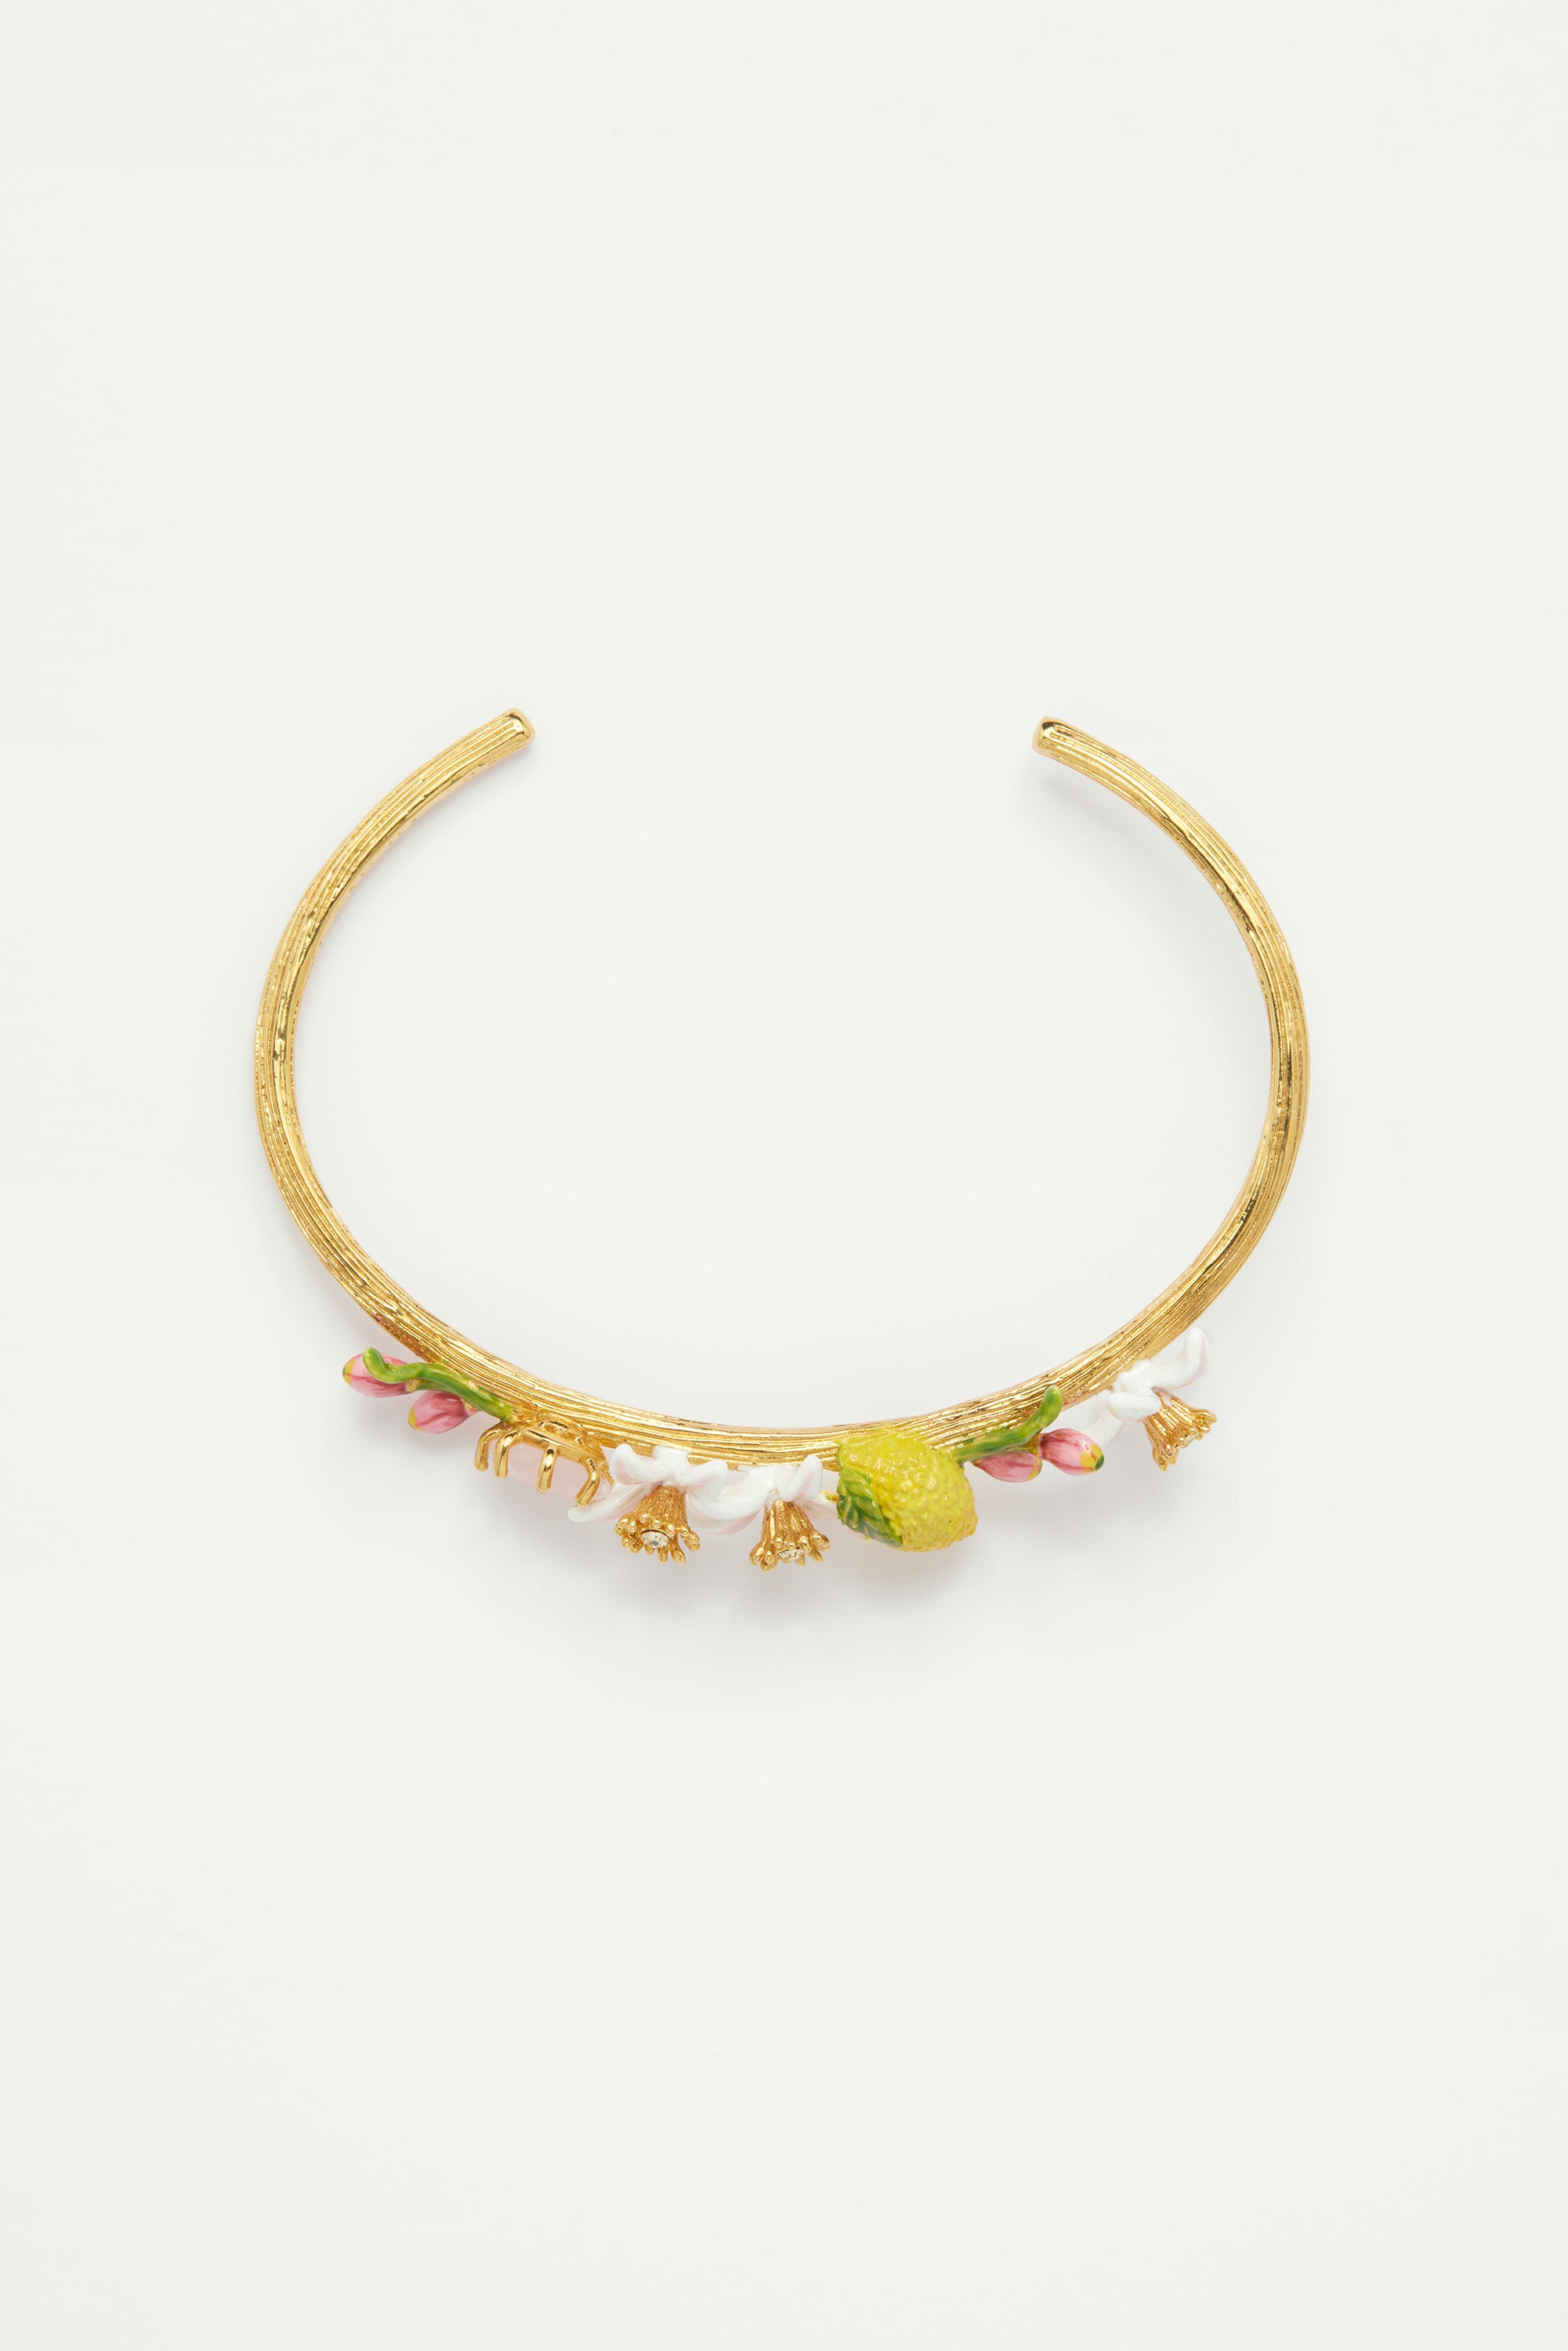 Lemon, lemon blossom and pink glass stone bangle bracelet